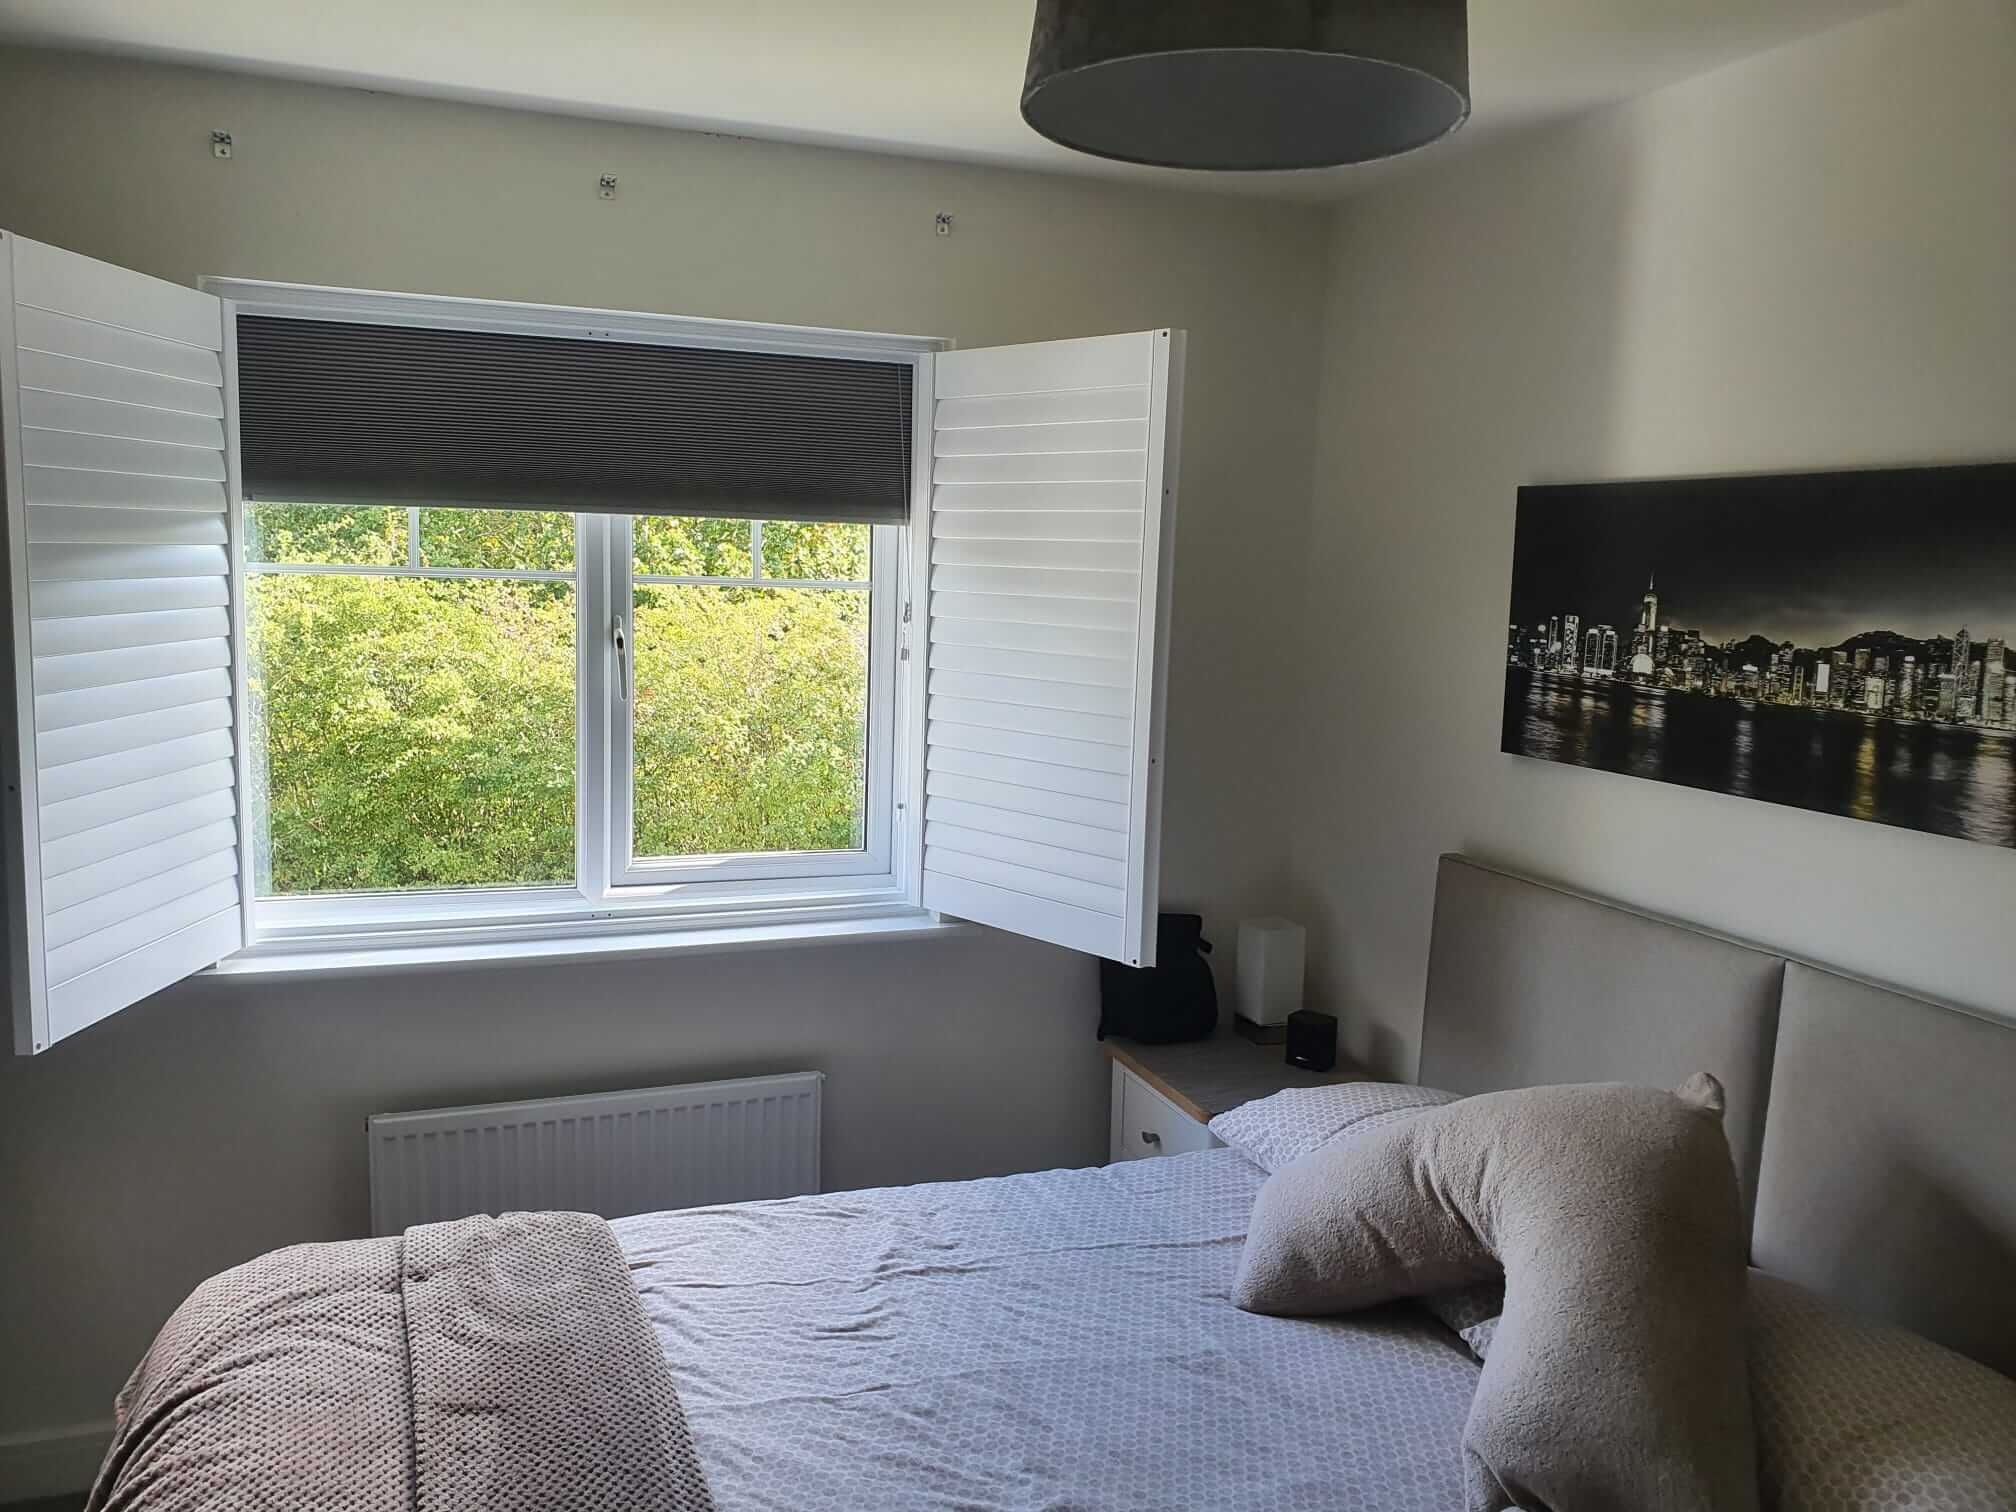 Telford Bedroom Shutter and shade Full height (2)